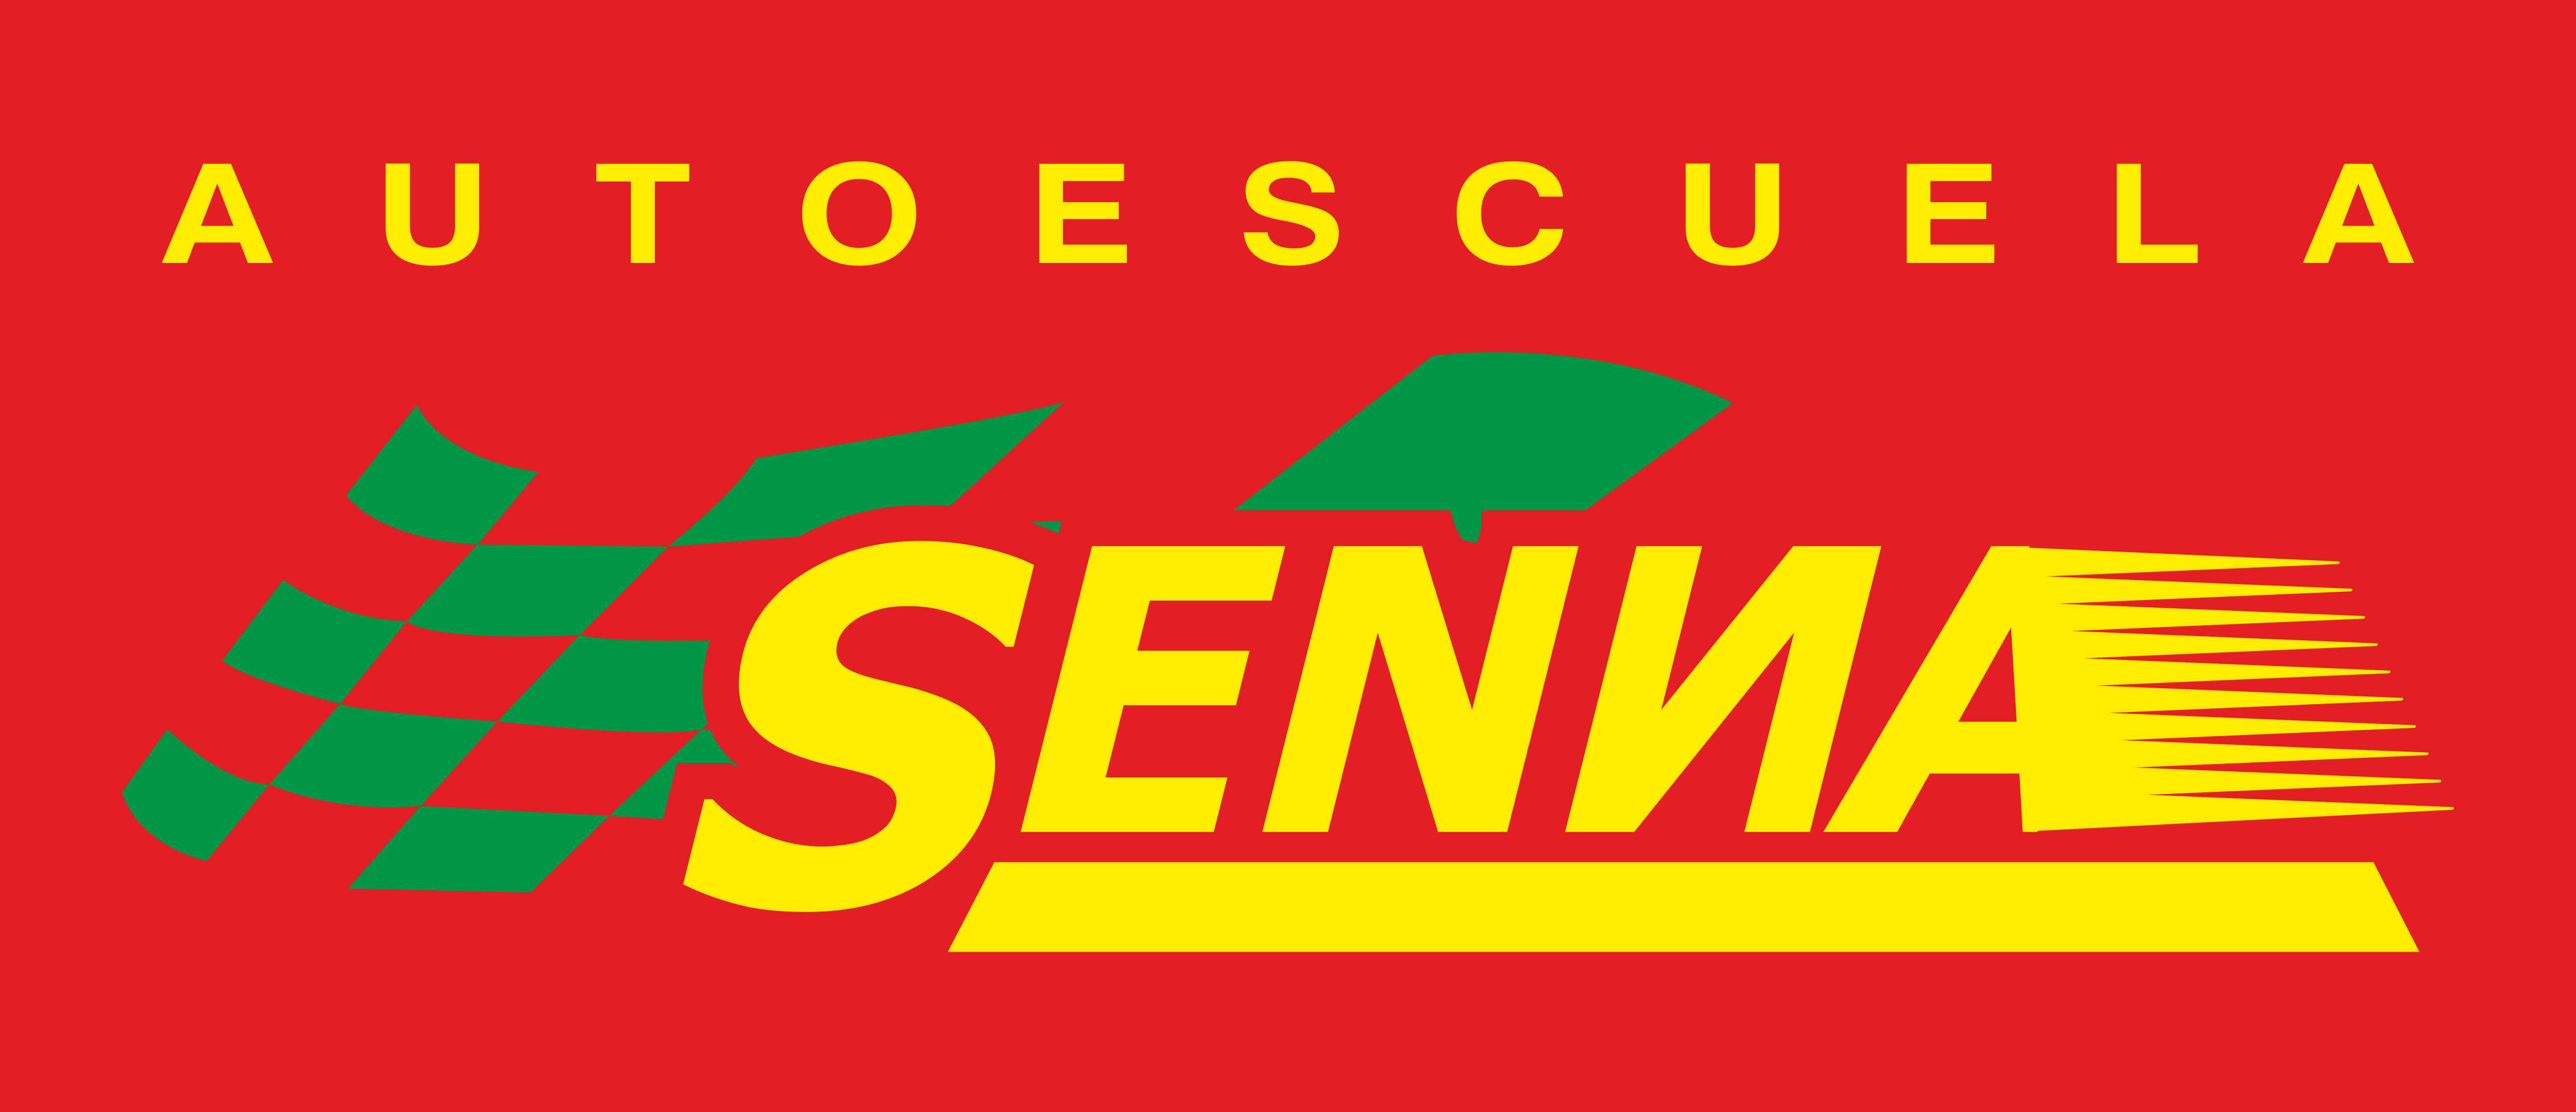 Autoescuela - Autoescuela Senna 